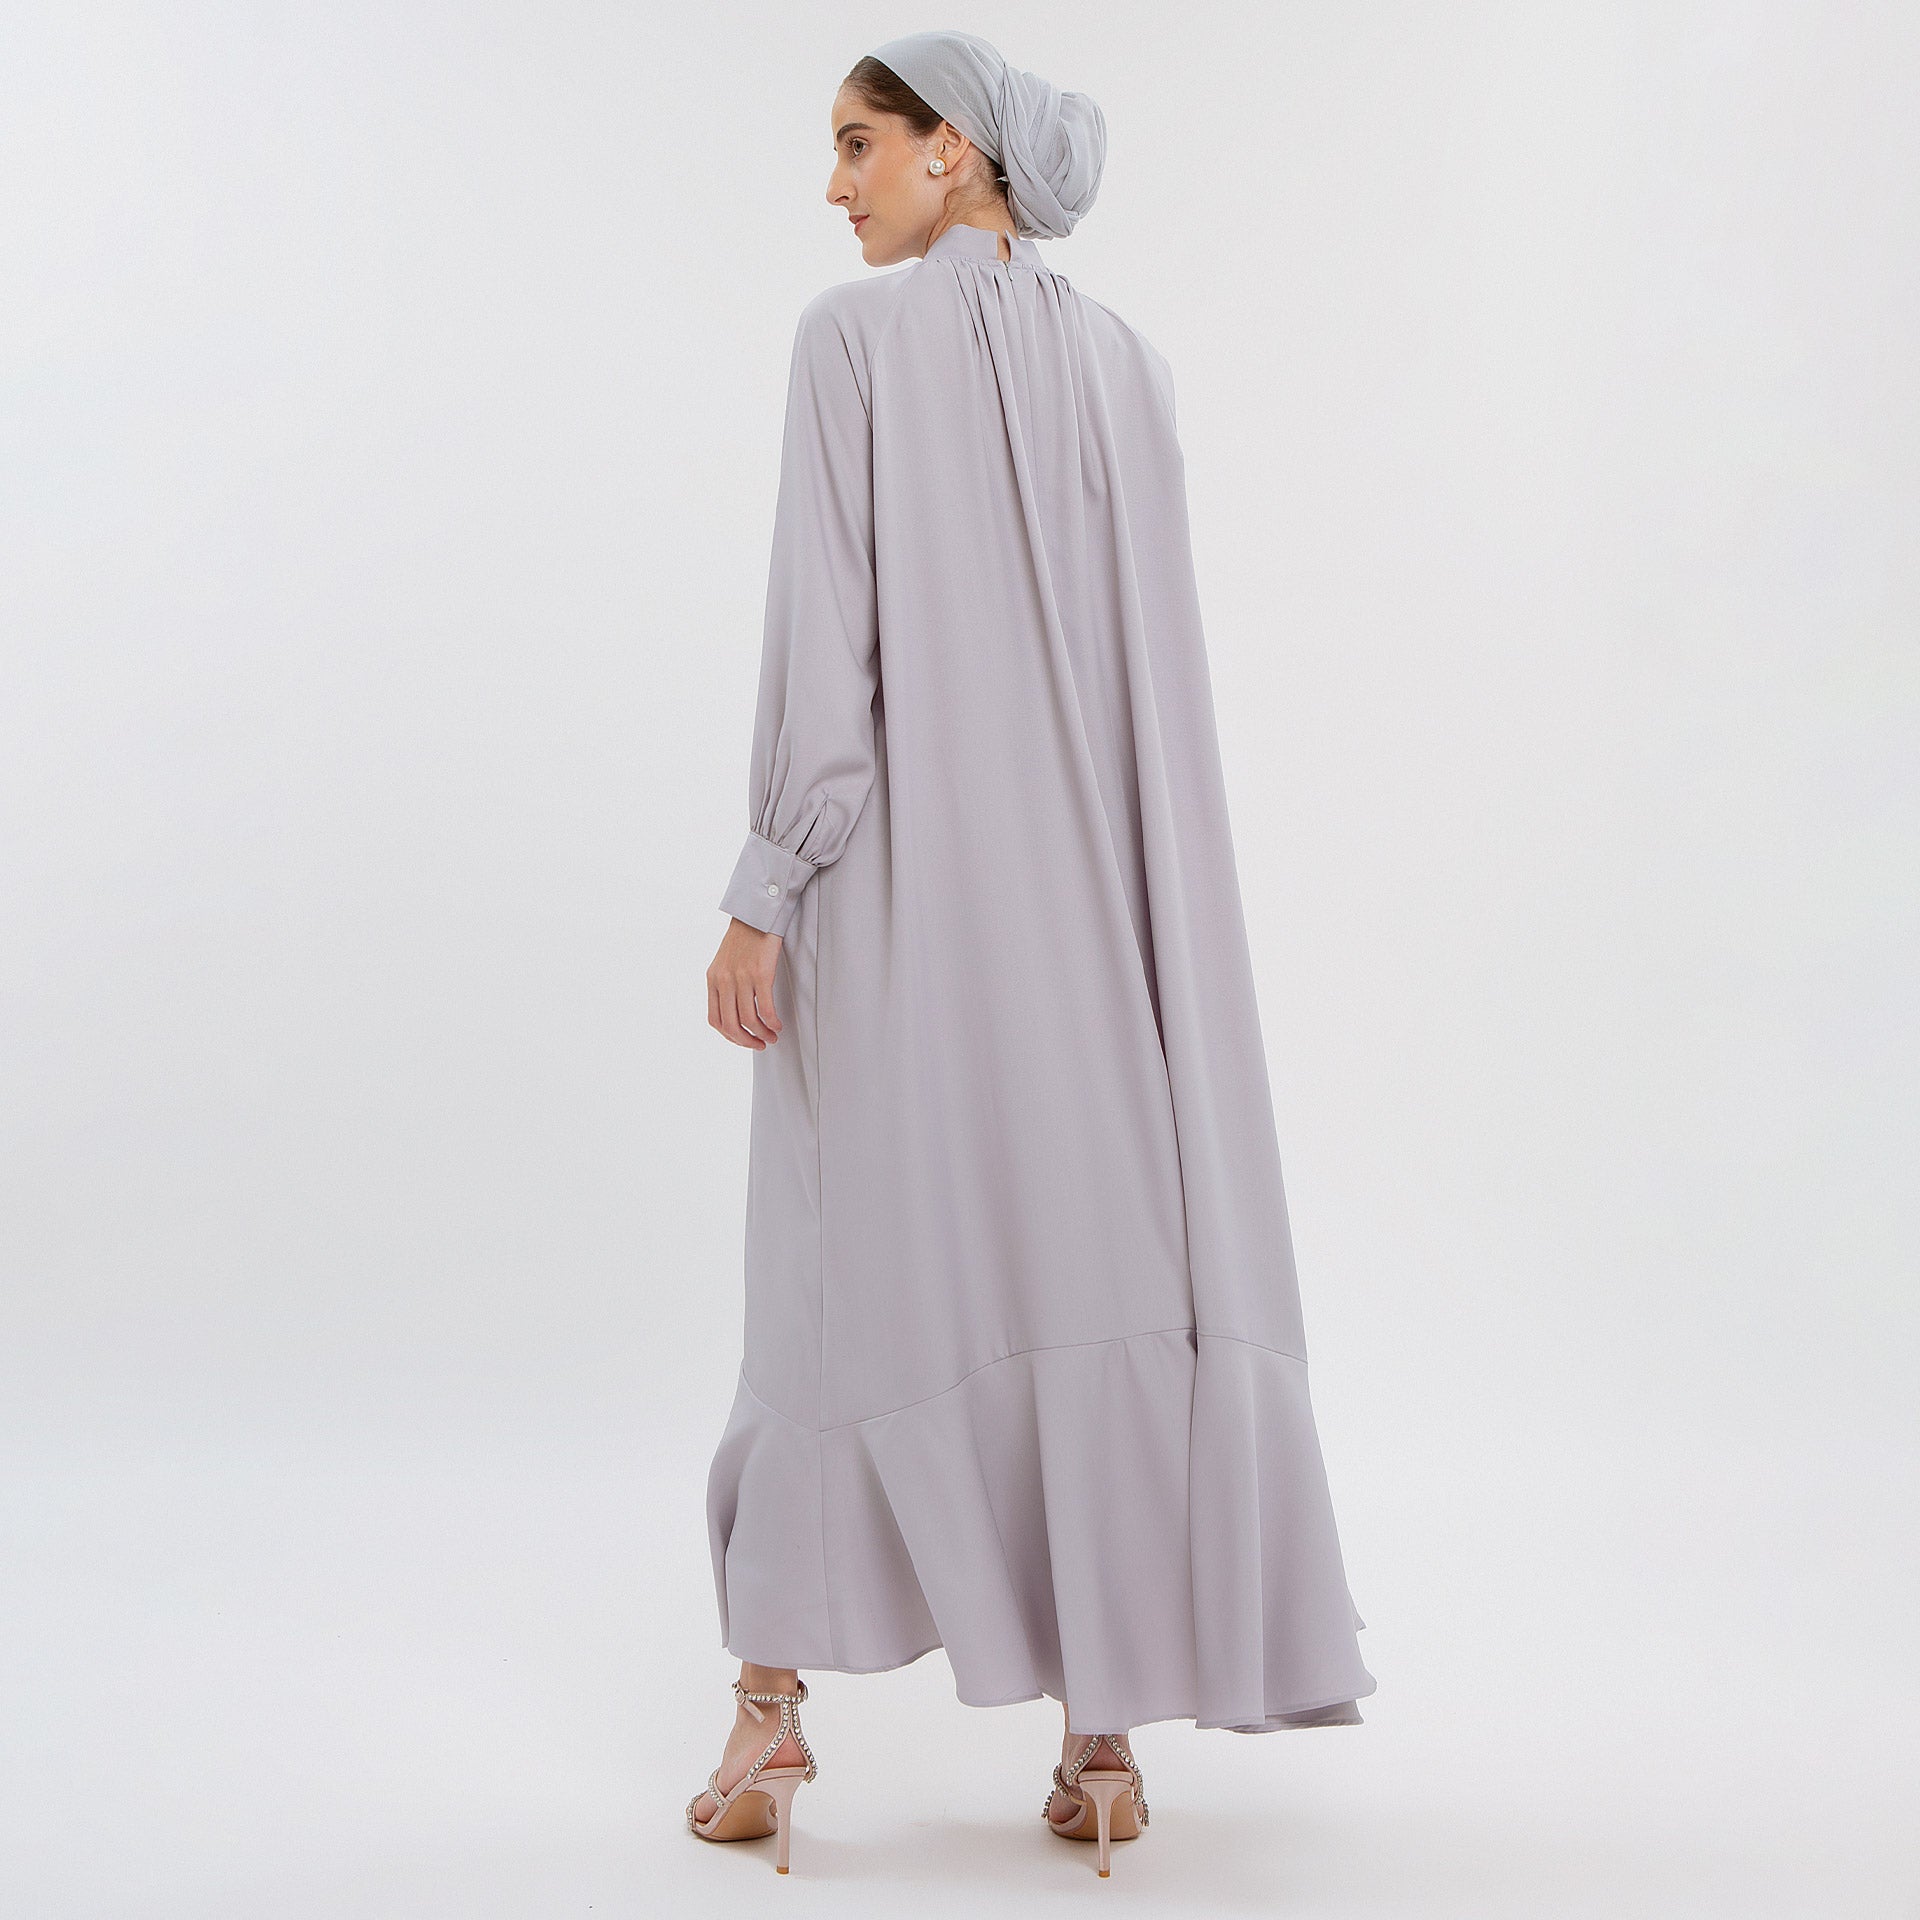 Jazyln Mauve Dress | HijabChic